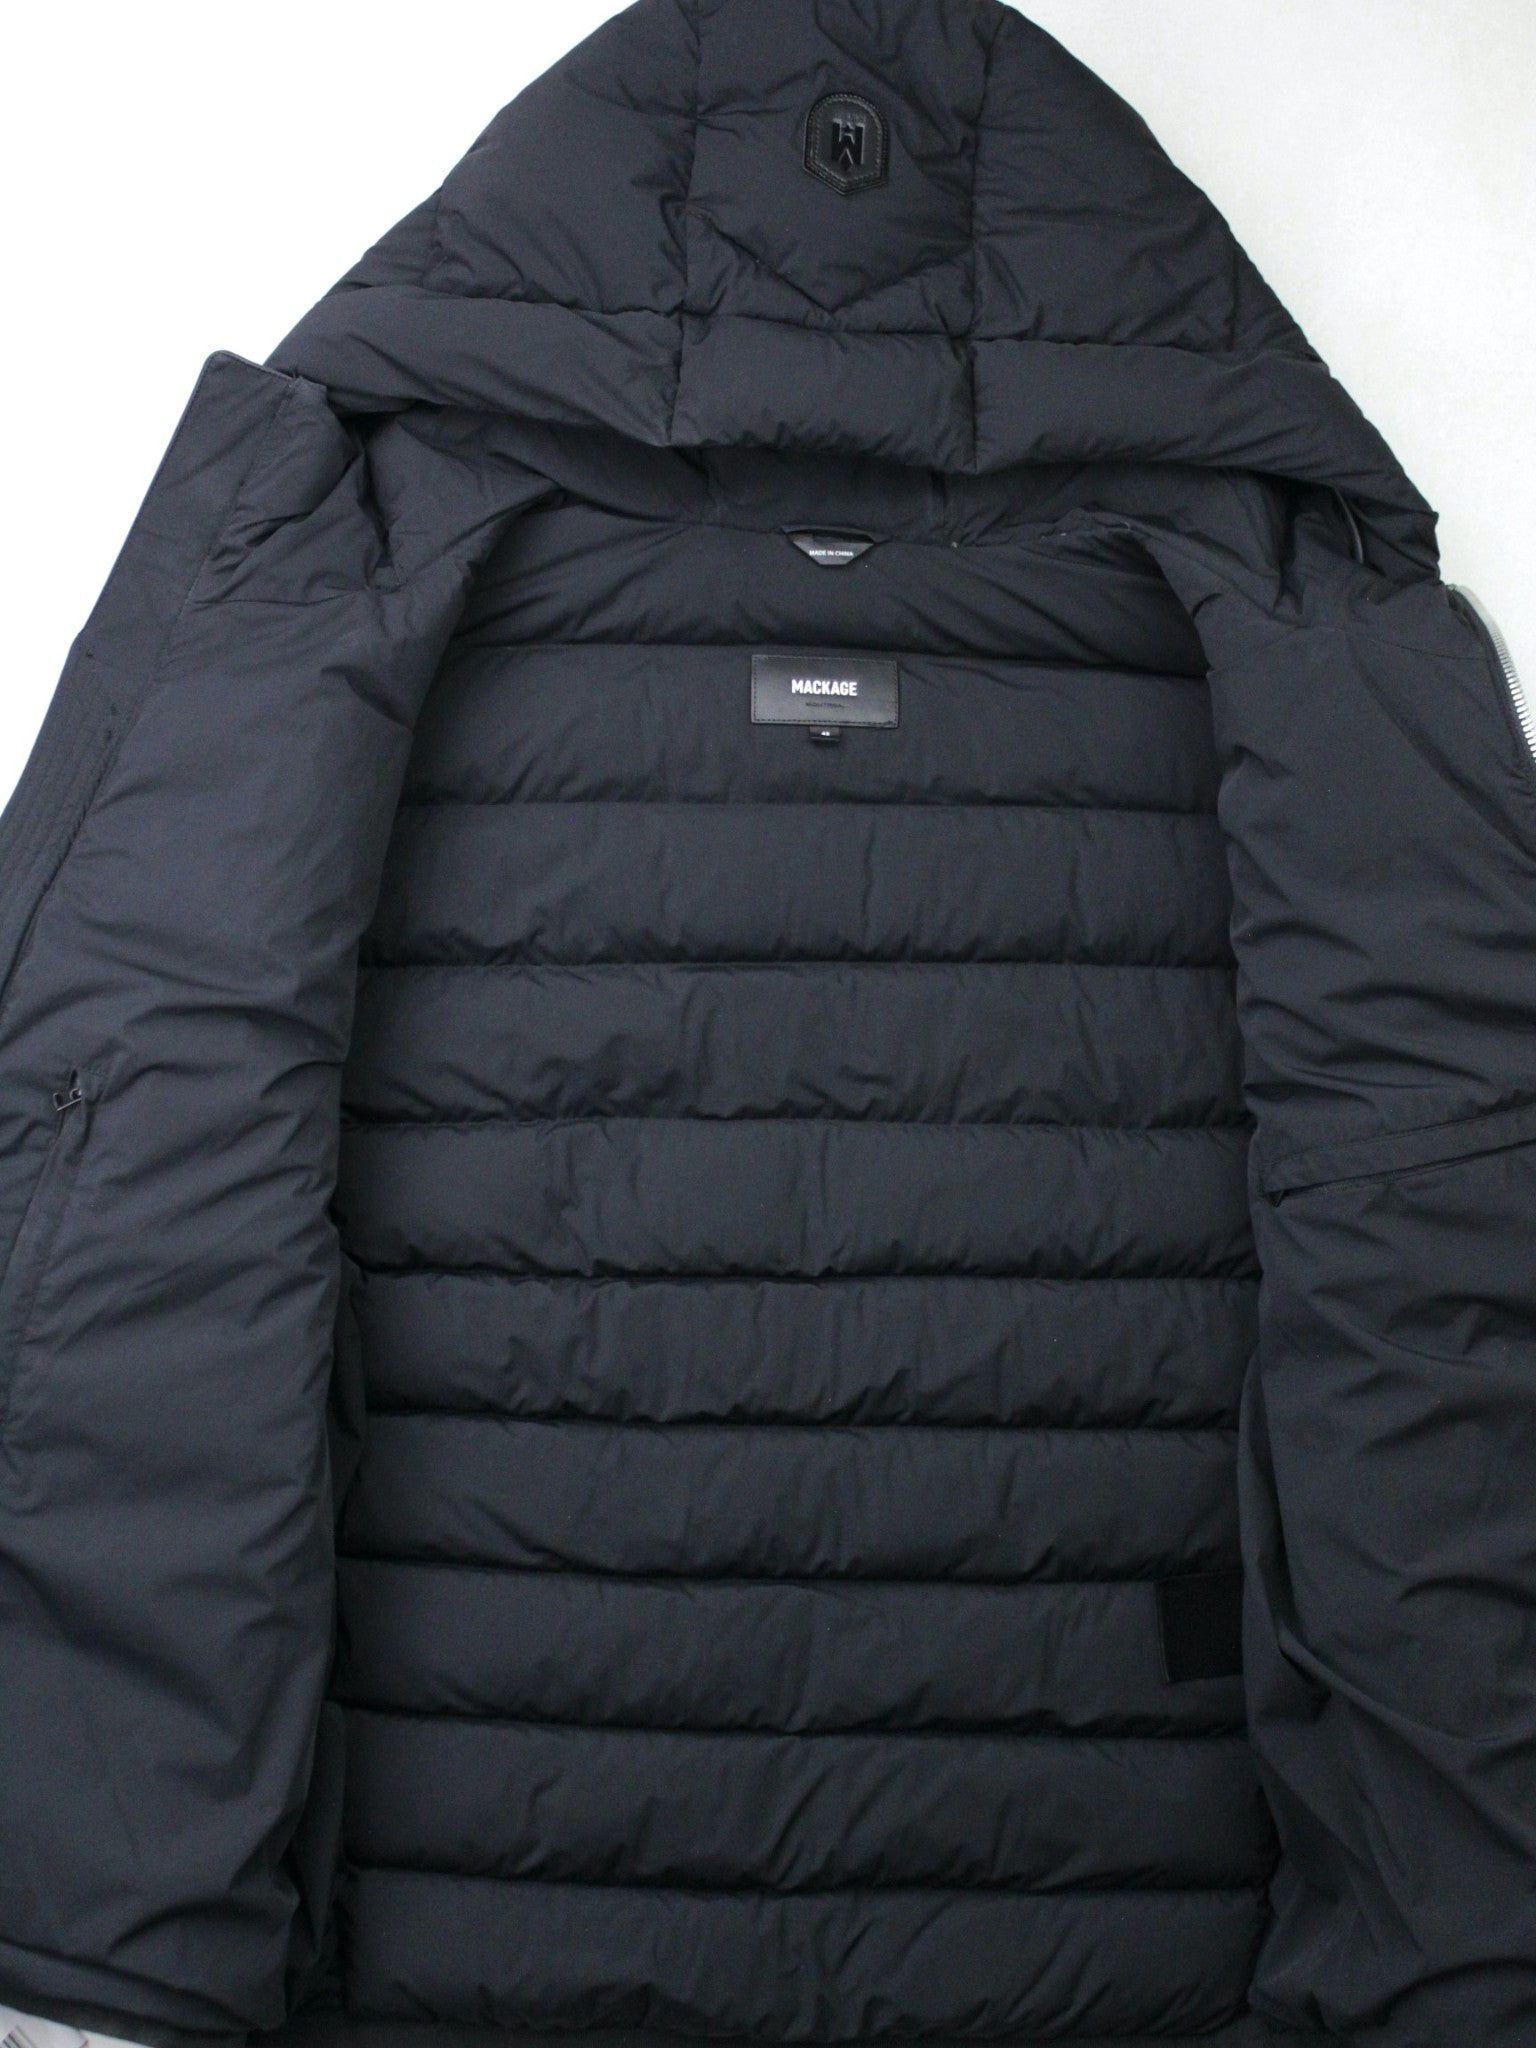 Mackage Jack Agile-360 Stretch Light Hooded Down Jacket Size 42 Black